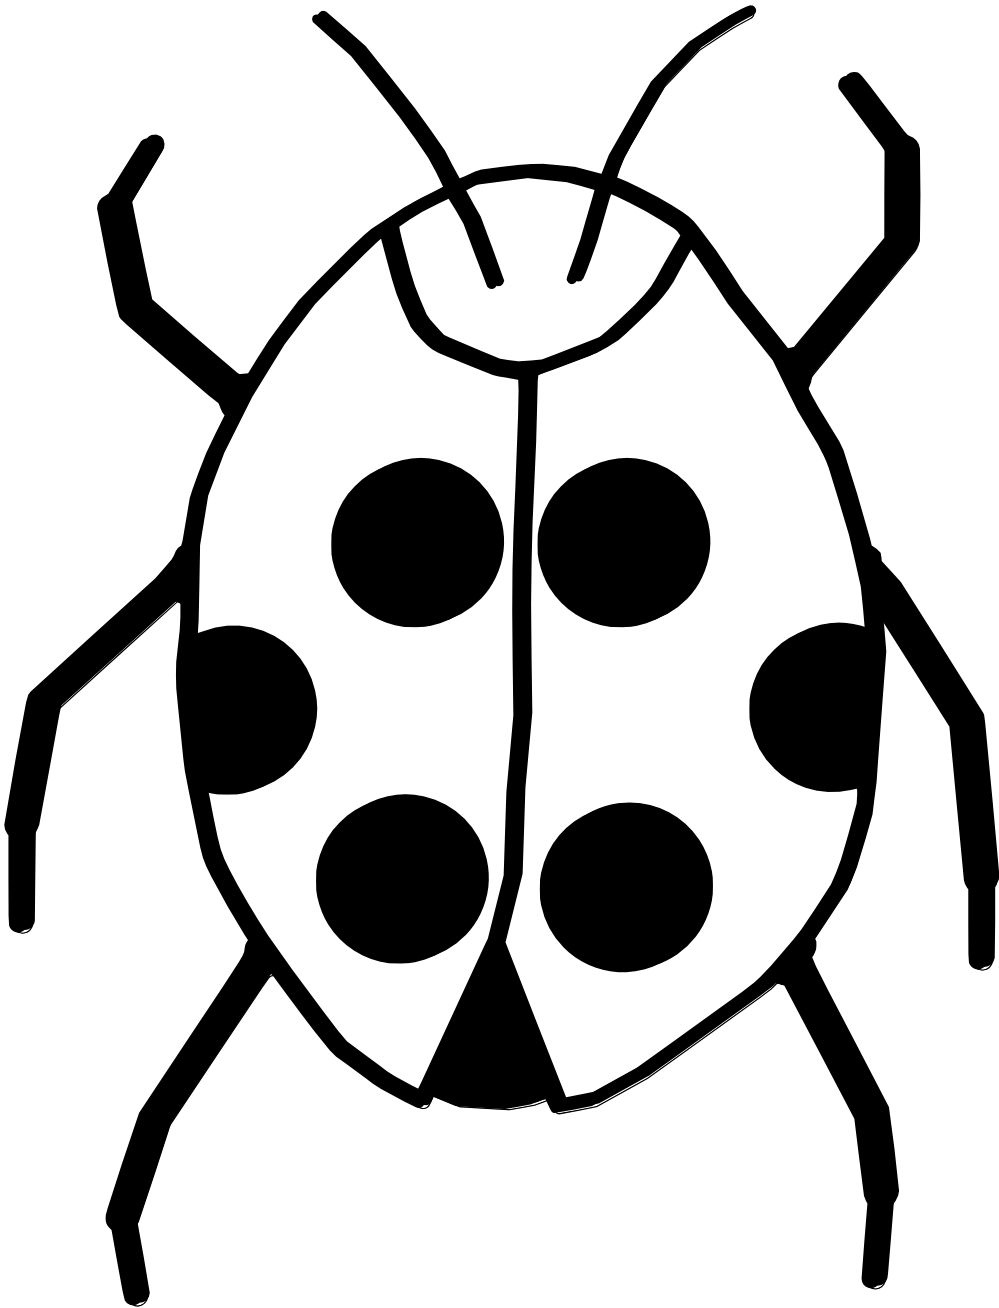 Images For > Ladybug Clip Art Black And White